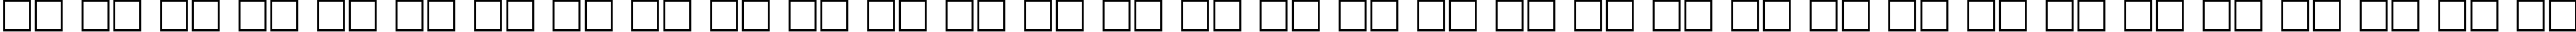 Пример написания русского алфавита шрифтом Pragmatica Bold110b